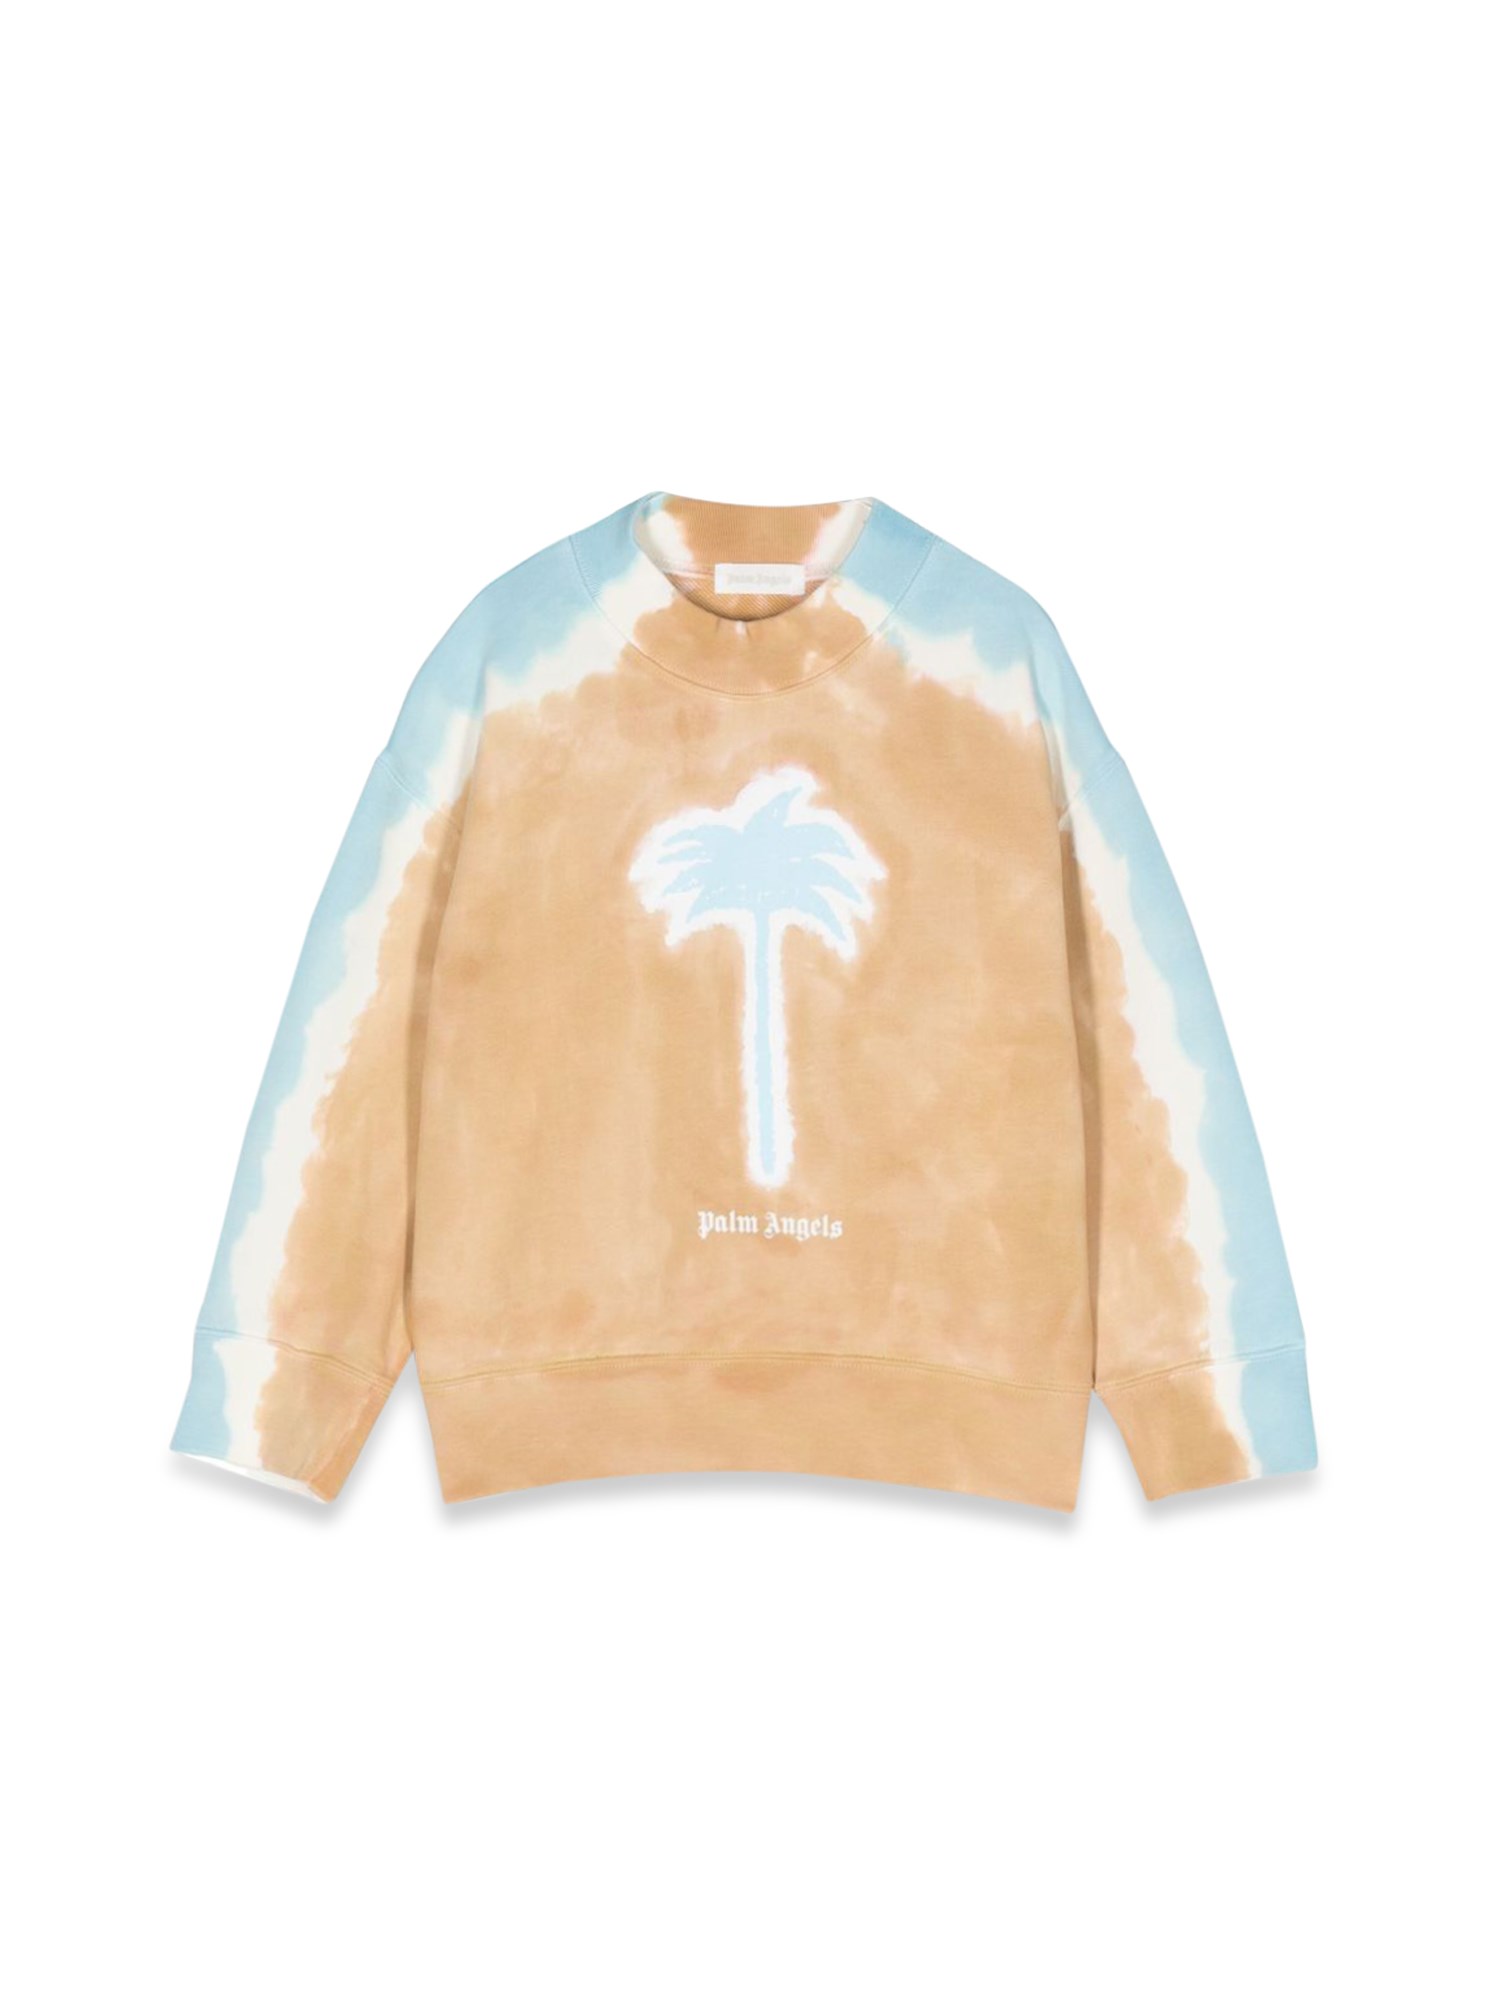 palm angels crewneck sweatshirt